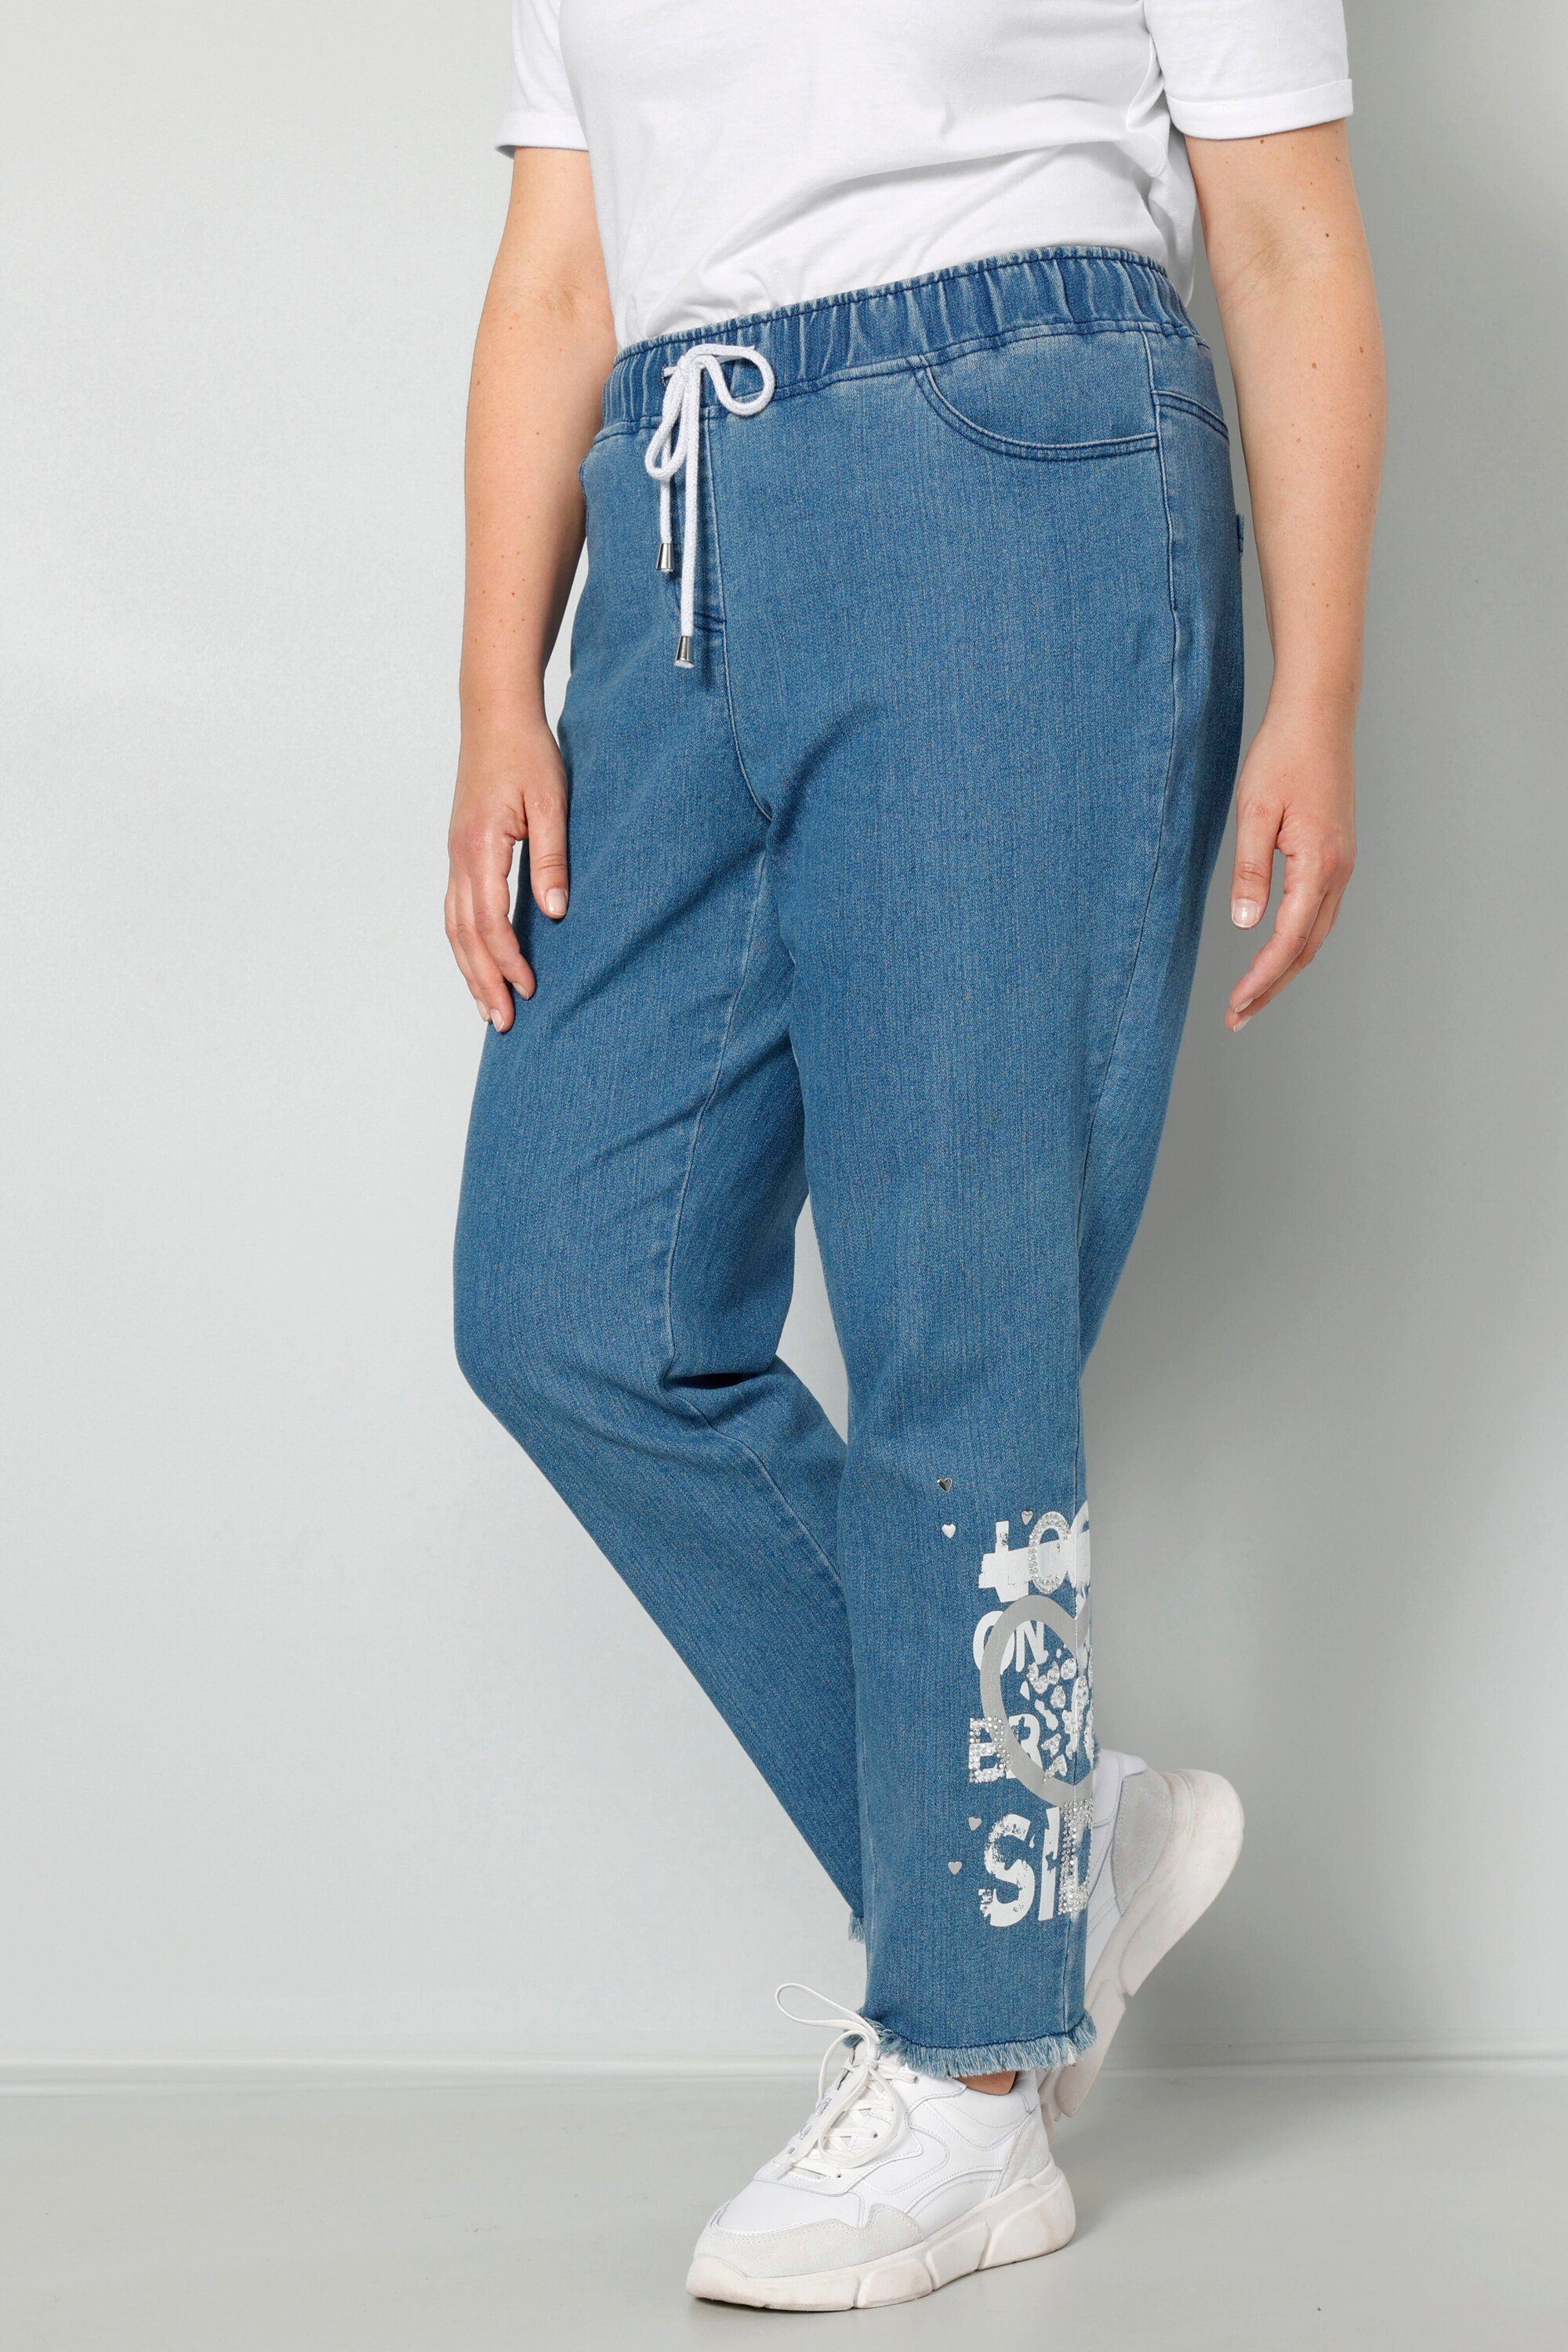 MIAMODA Lederimitathose Jeans-Joggpants Saumdruck Elastikbund